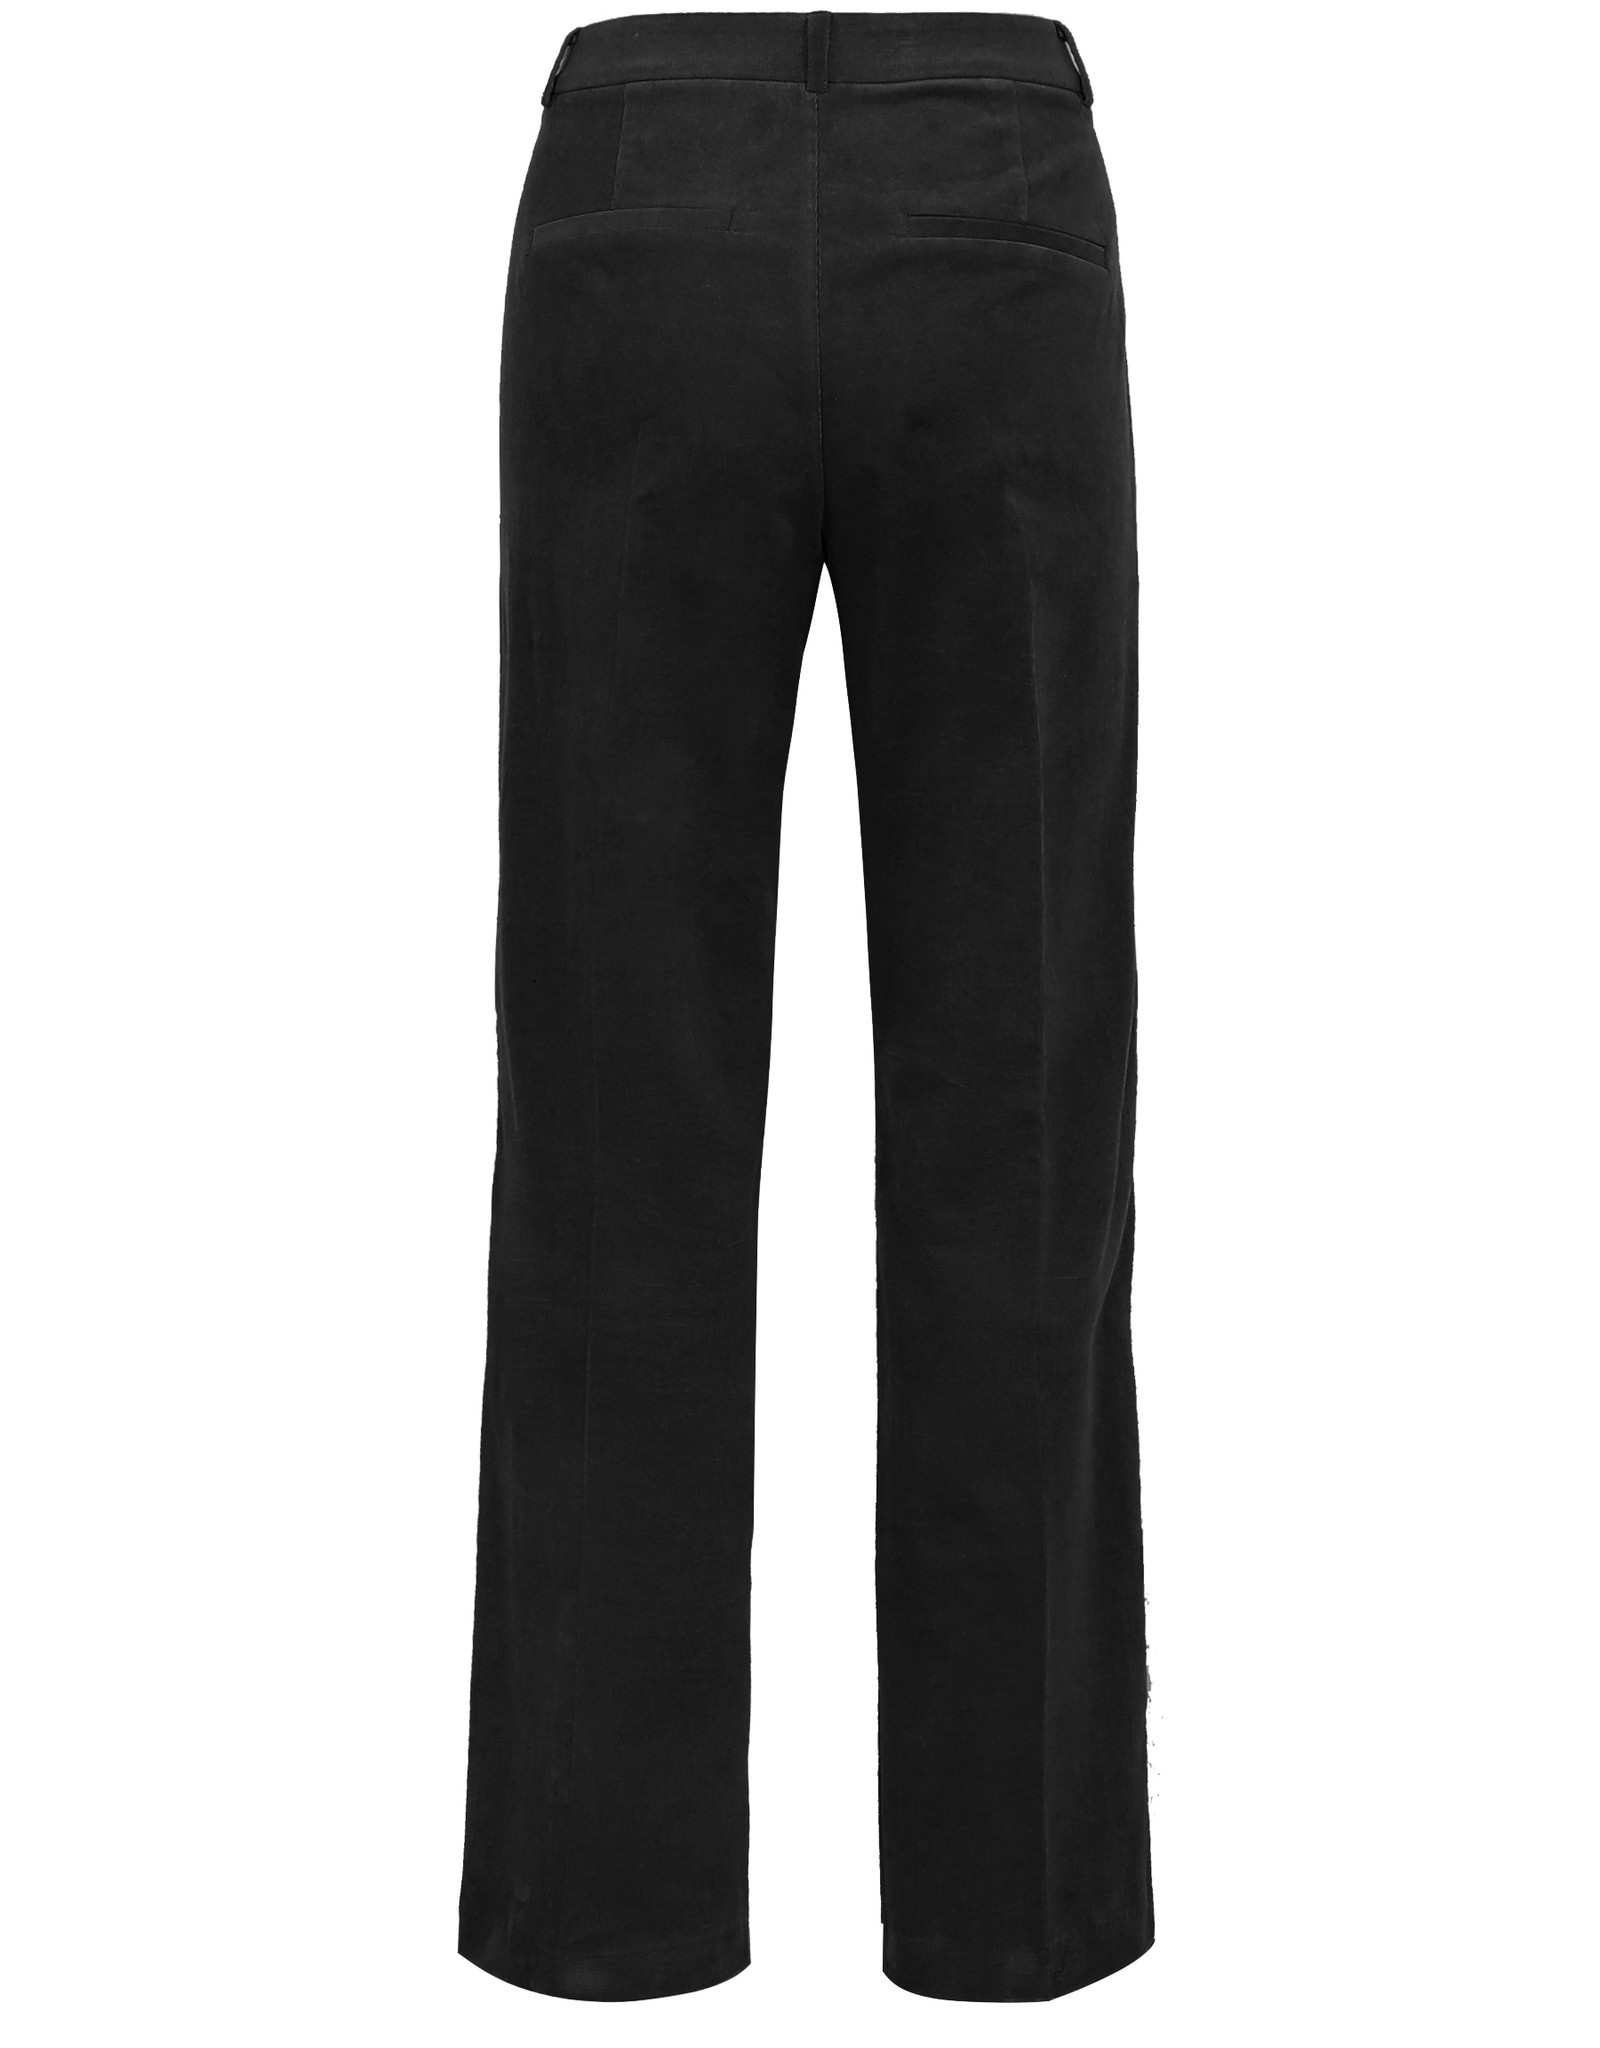 Rosemunde pantalon 'Oslo' - zwart fluweel